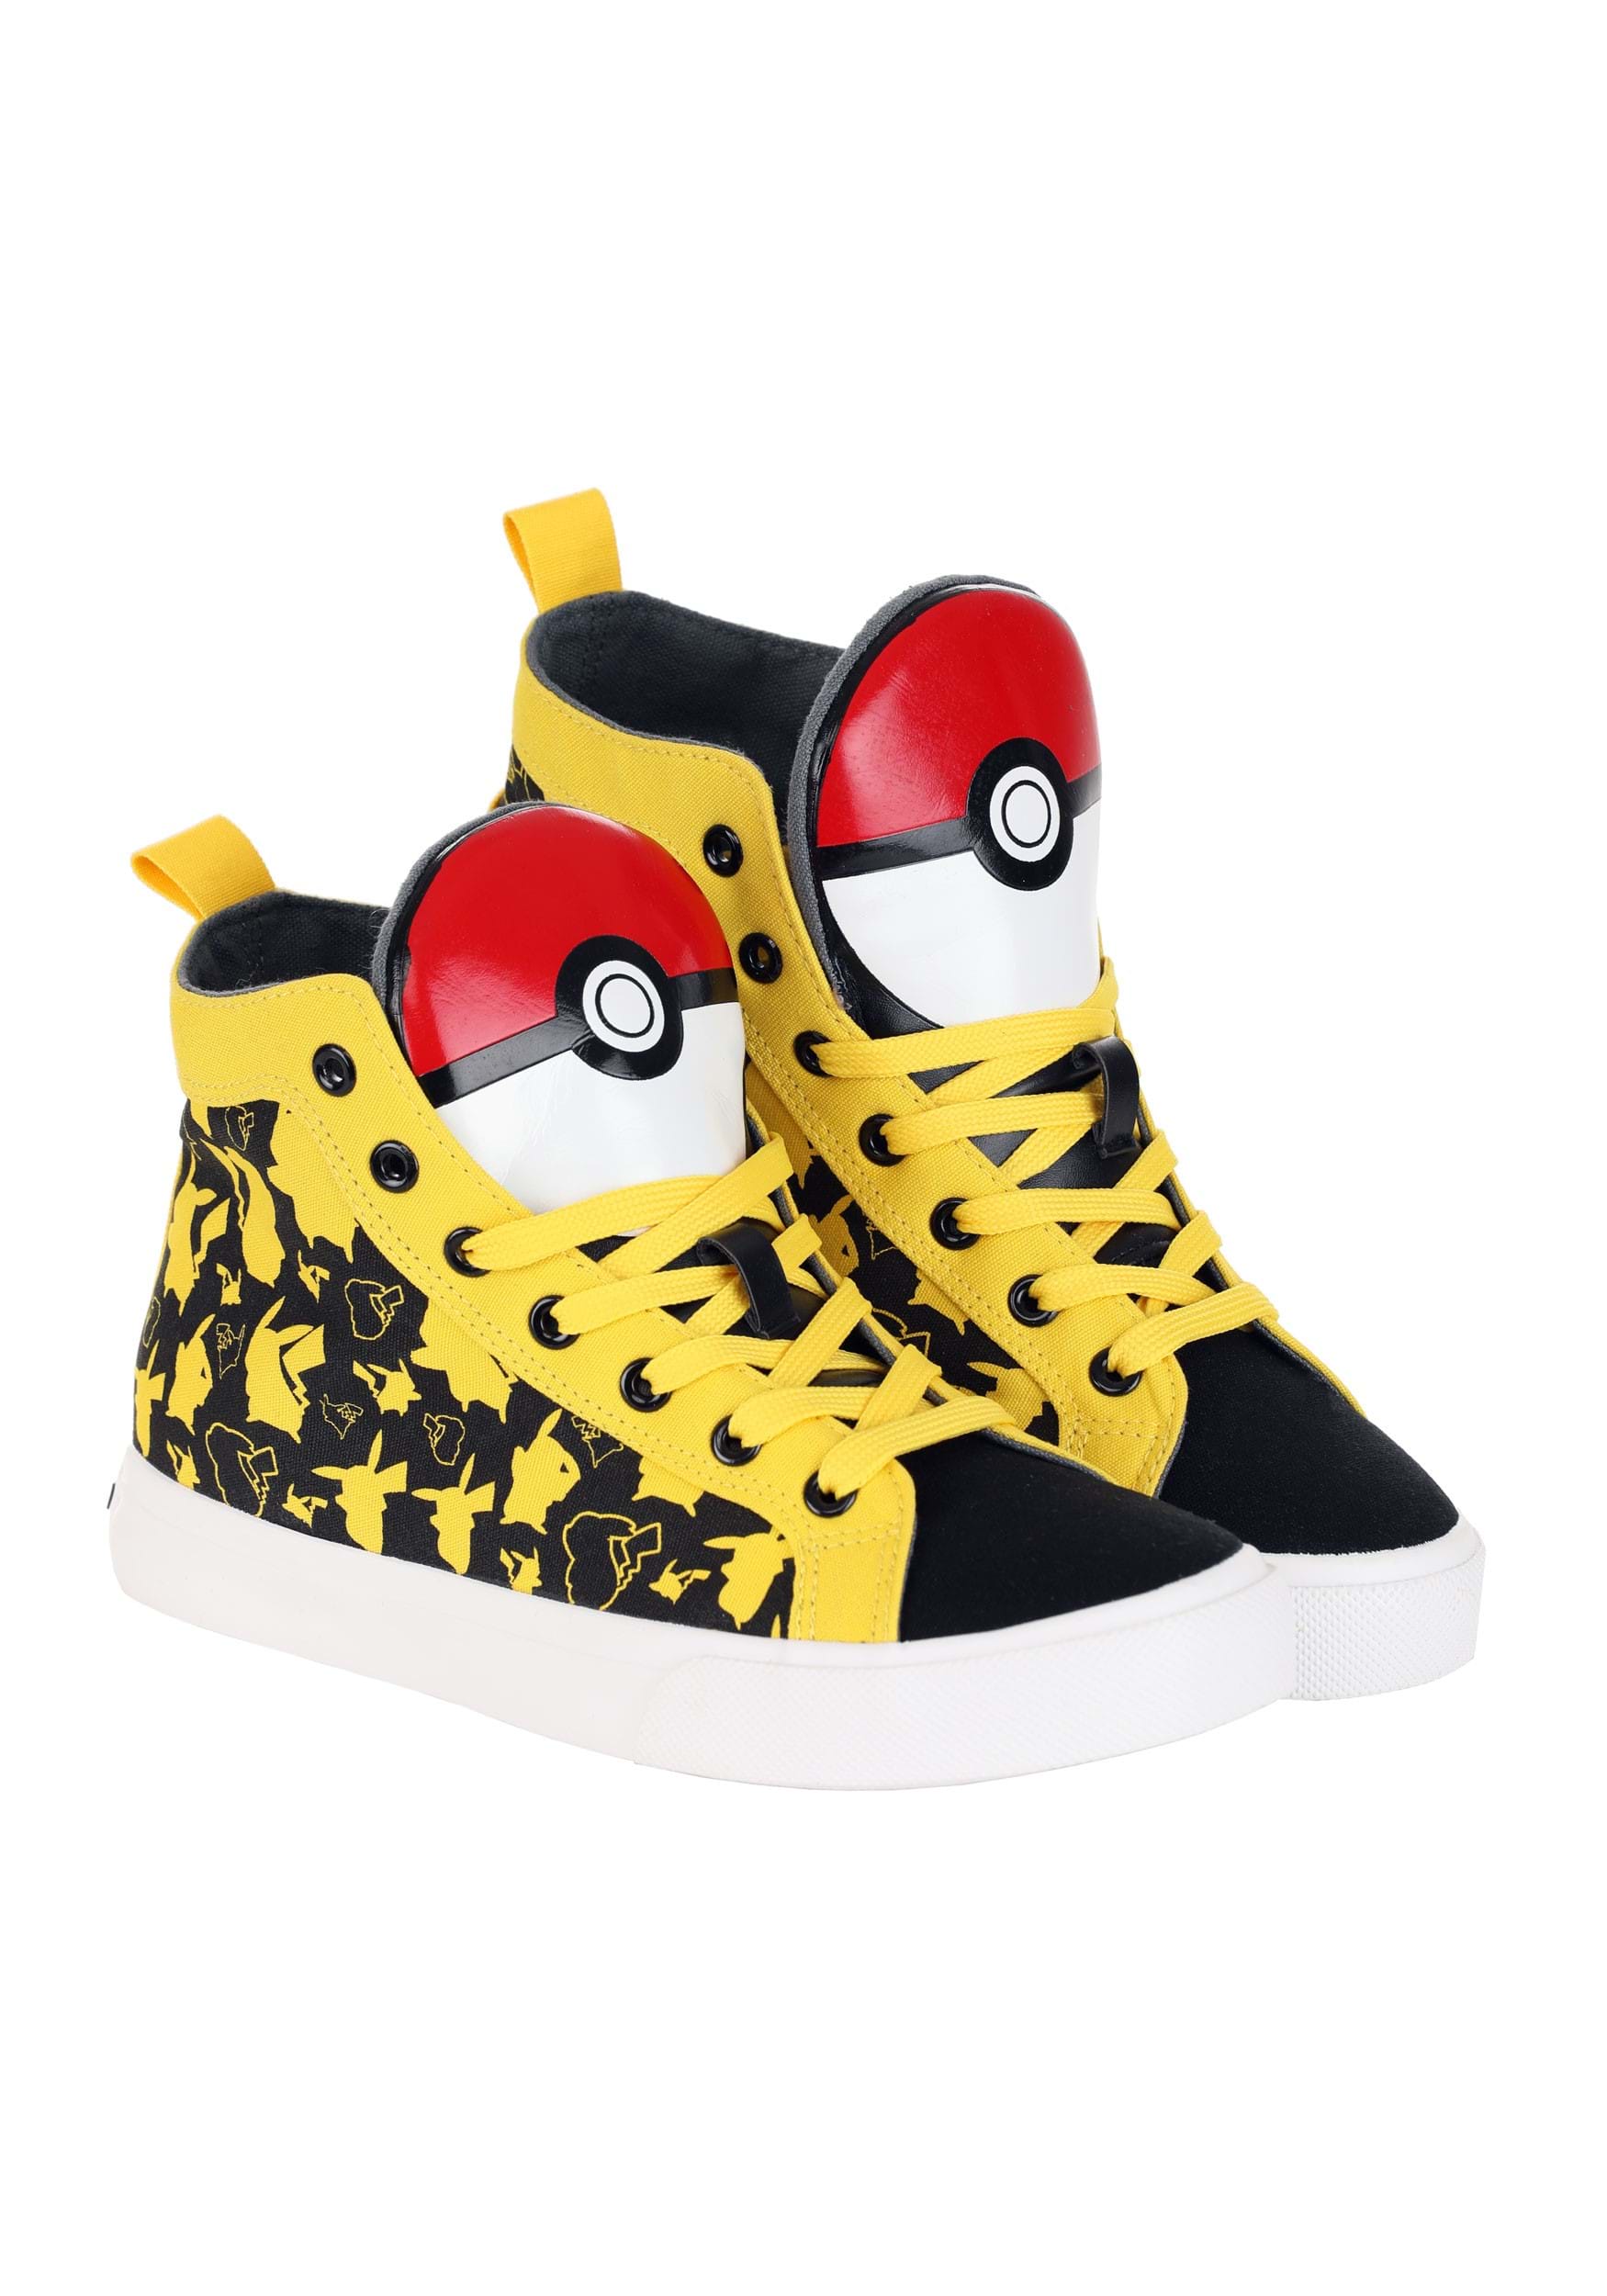 Adult Pokemon Pikachu High Top Shoes